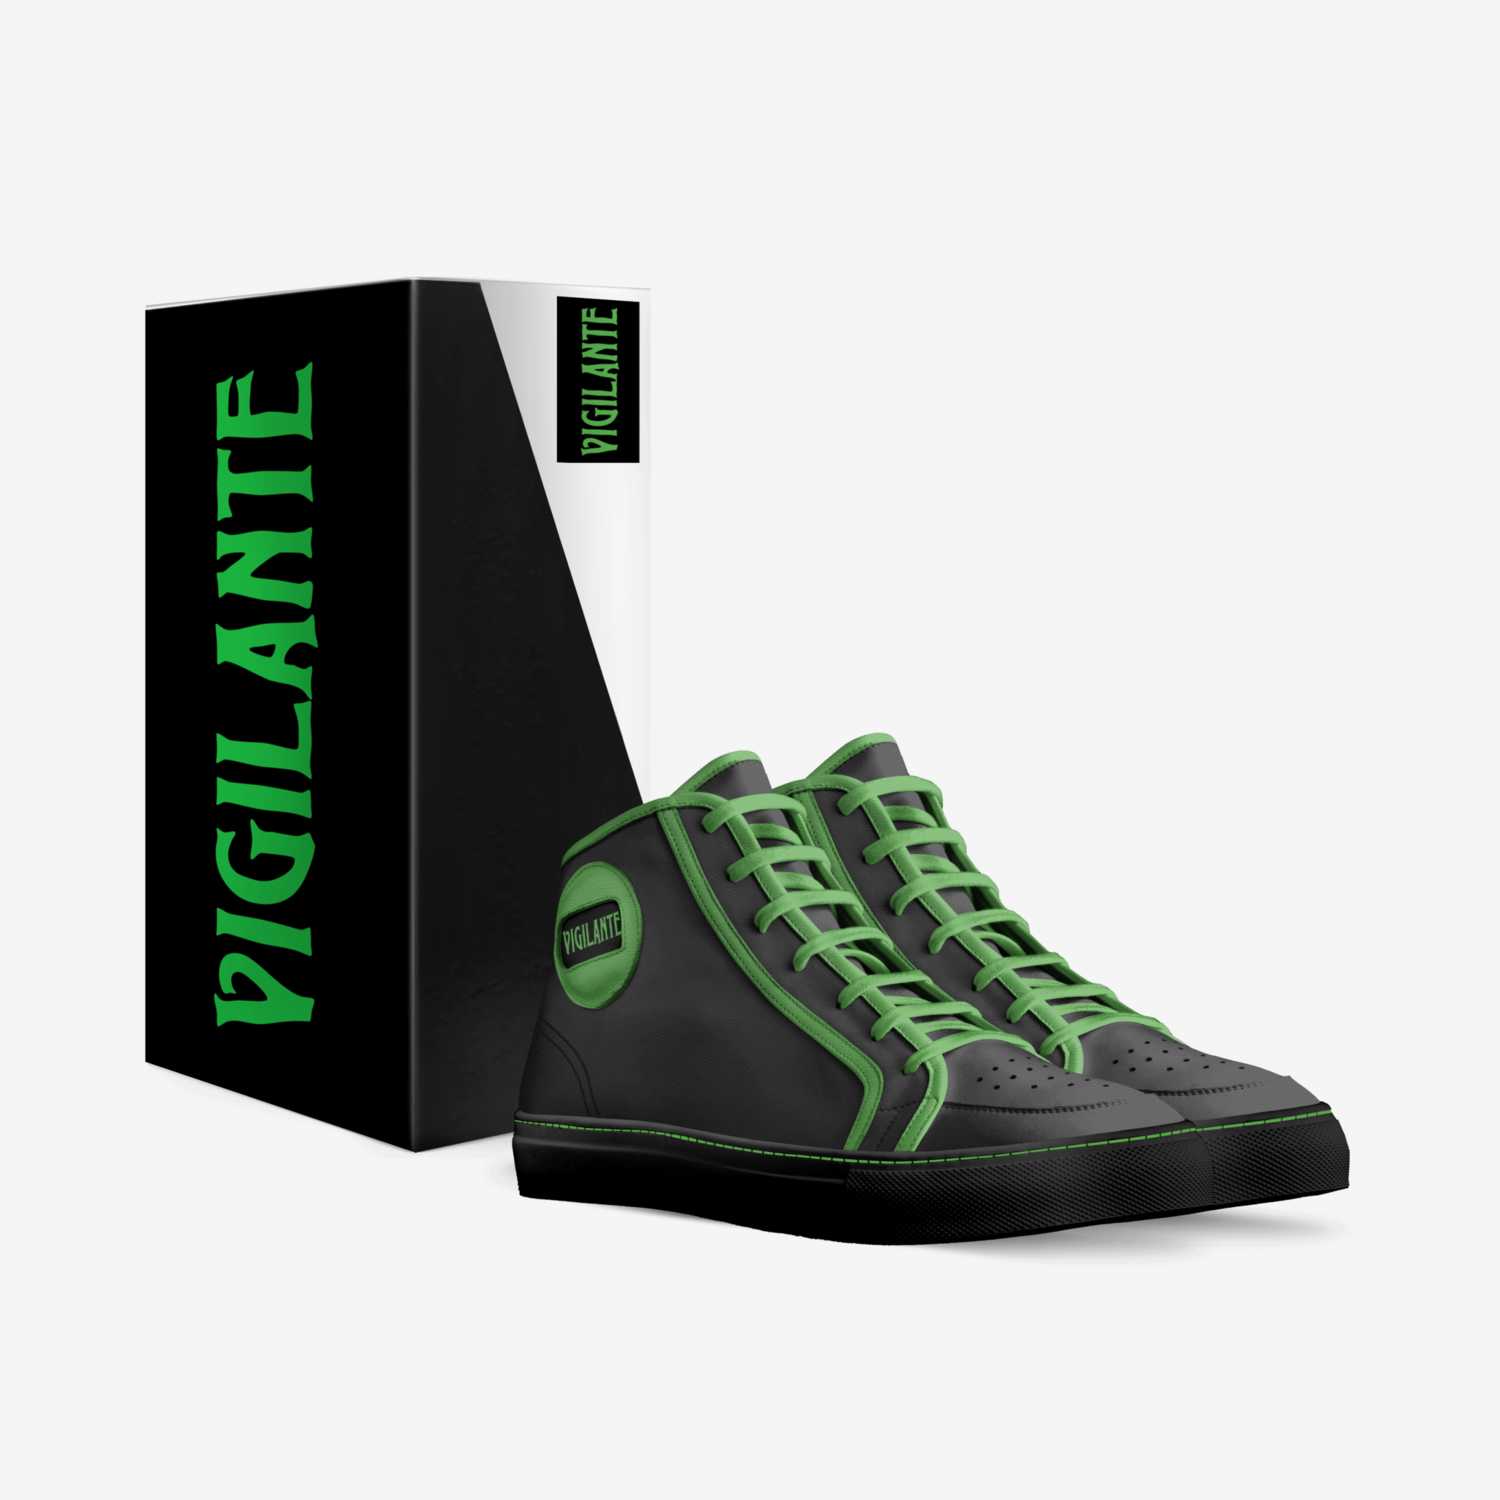 Vigilante custom made in Italy shoes by Ryan Hardaway | Box view